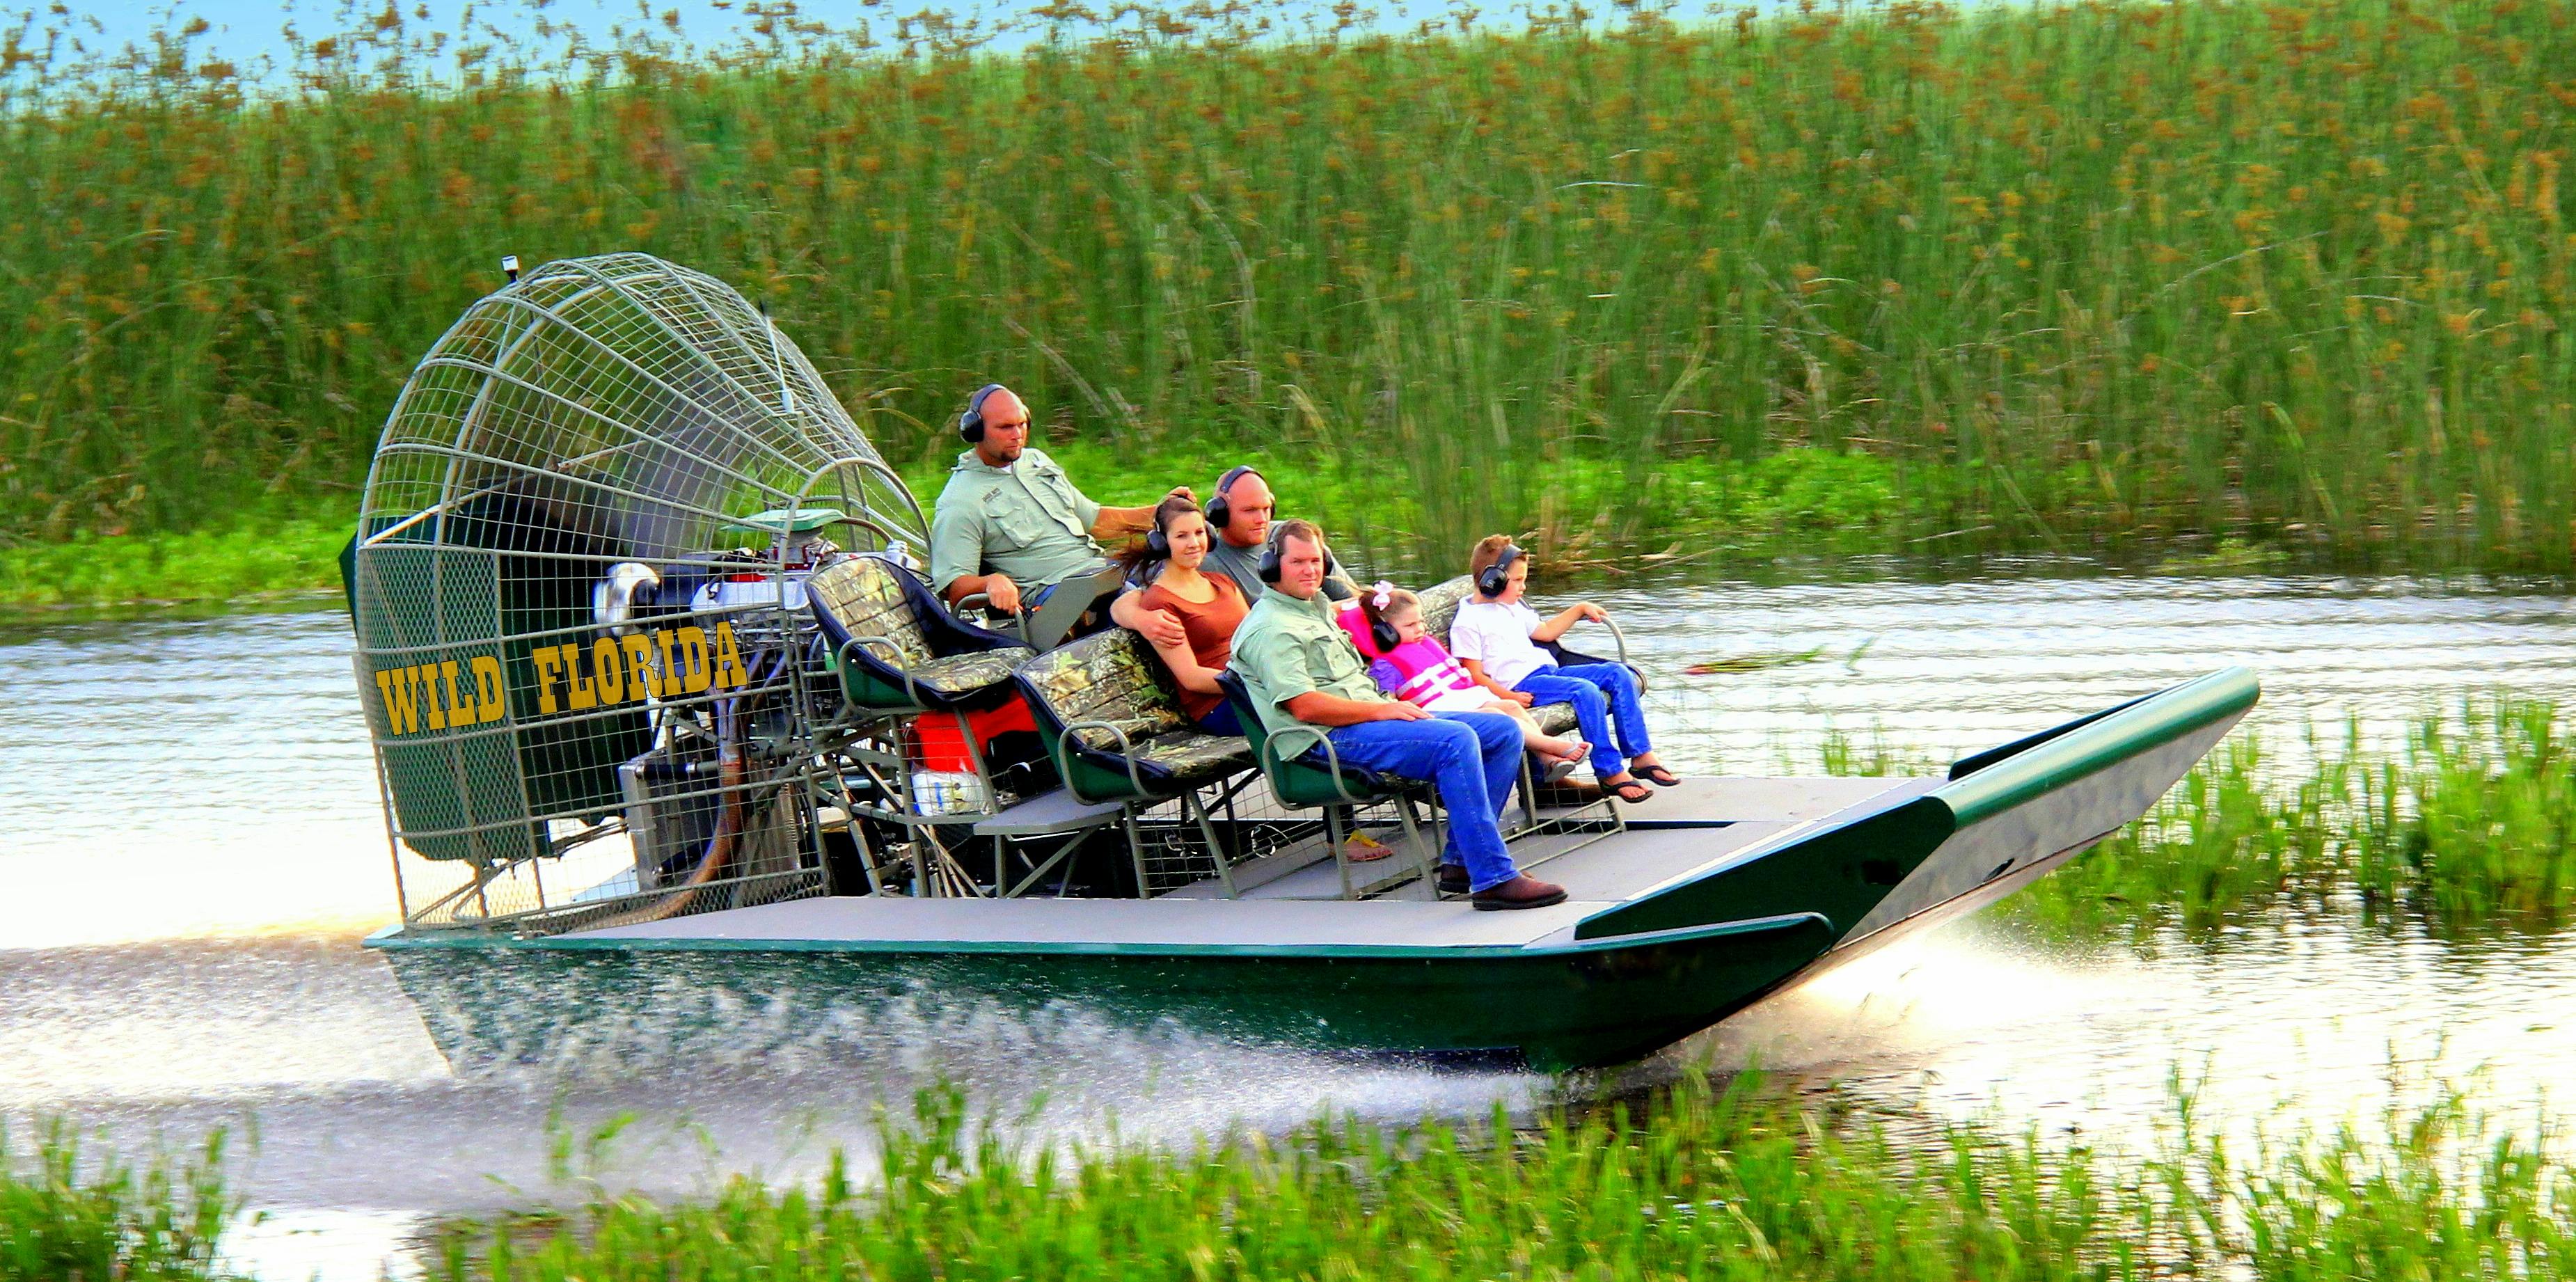 30 minute Everglades tour and Safari park combo Musement